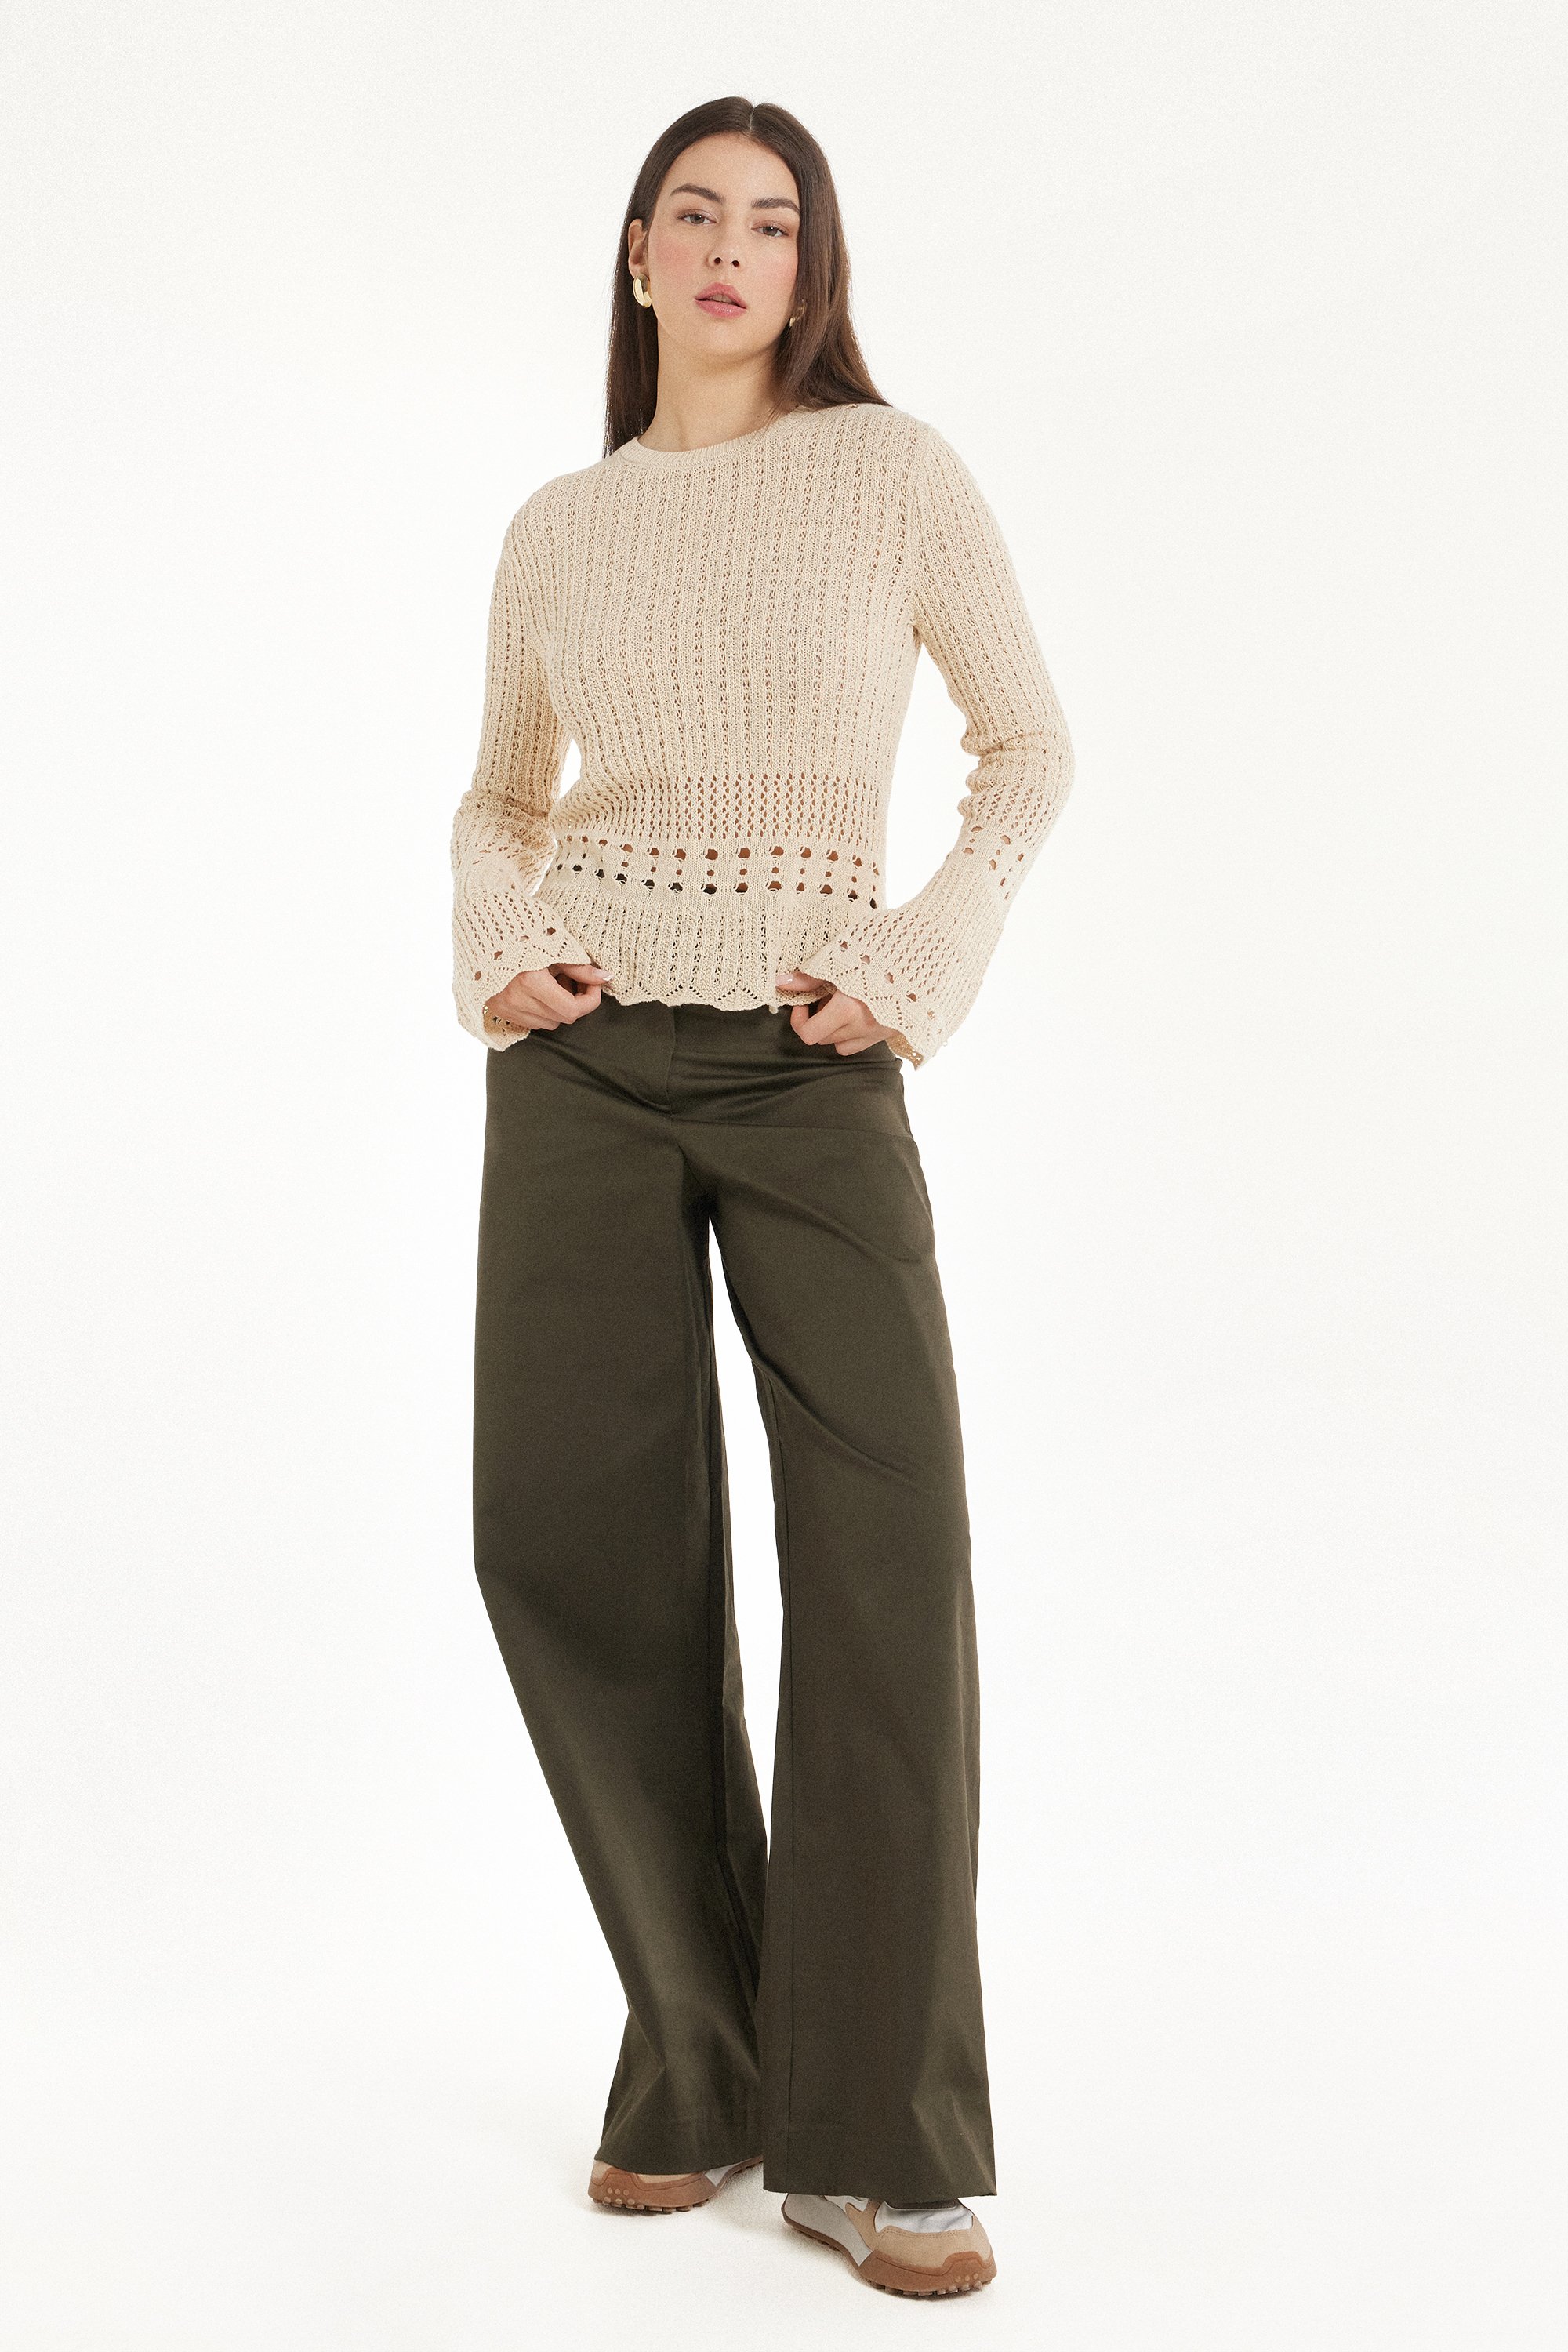 Long-Sleeved Crochet Top